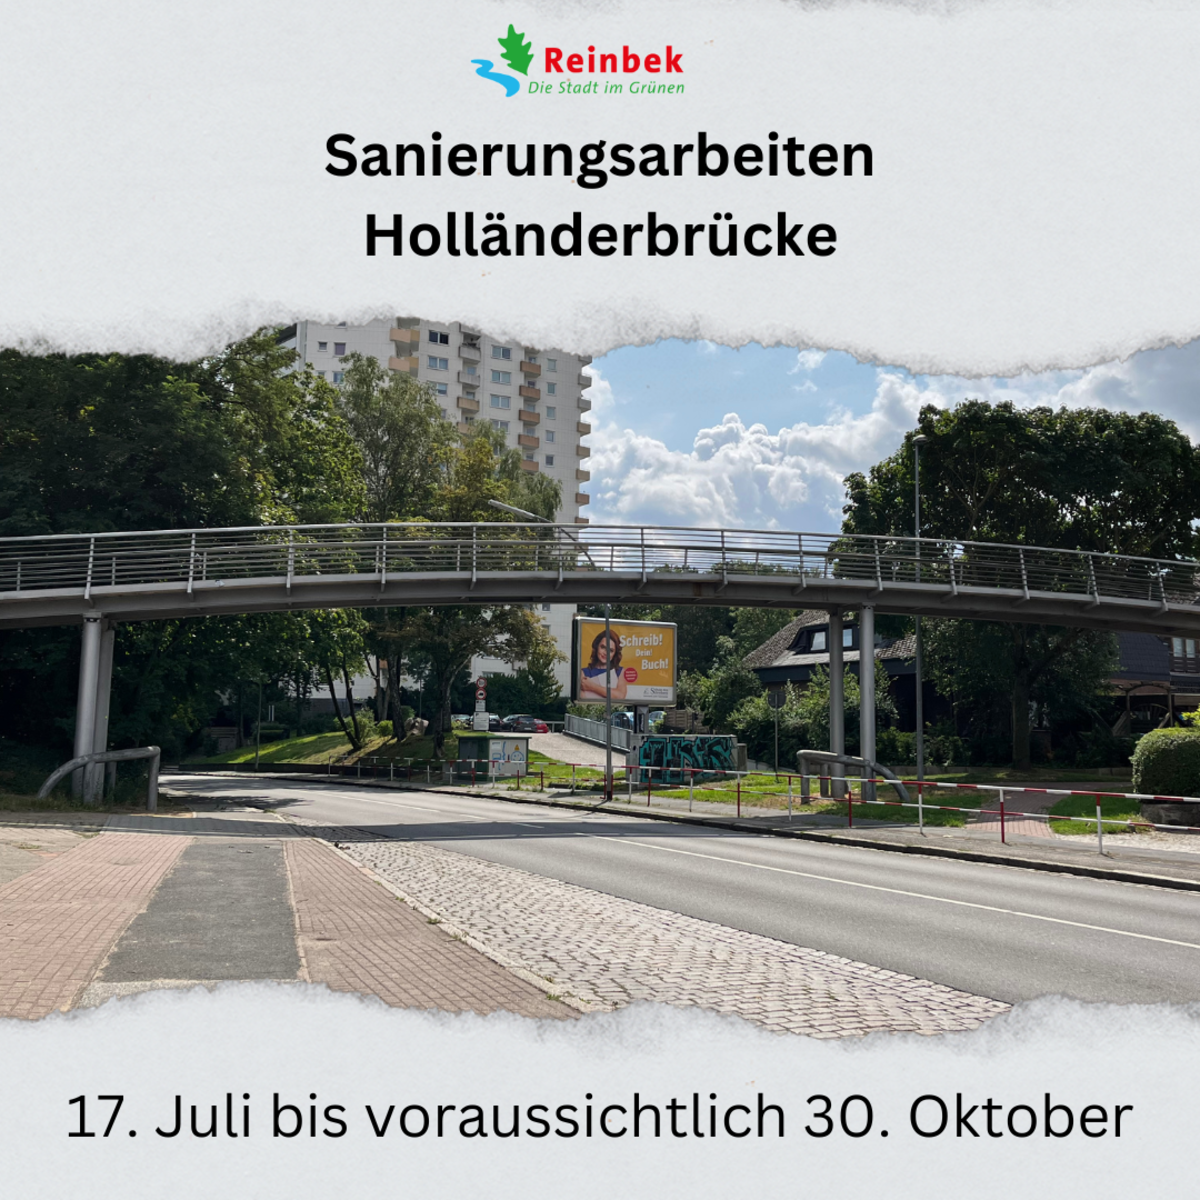 Holländerbrücke Hamburger Straße und Text